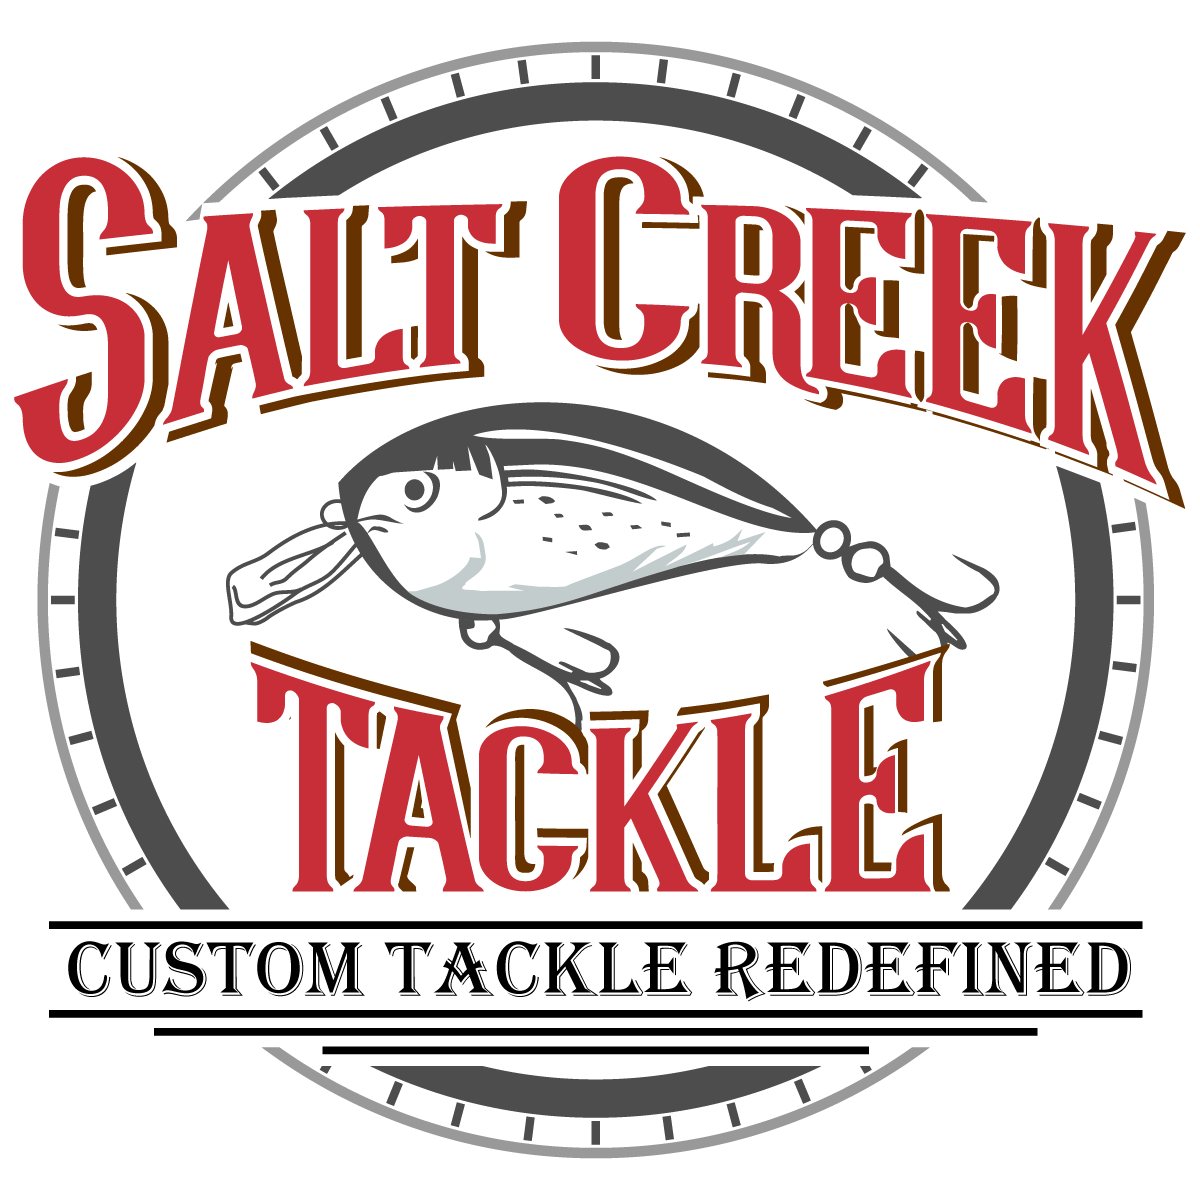 salt-creek-tackle